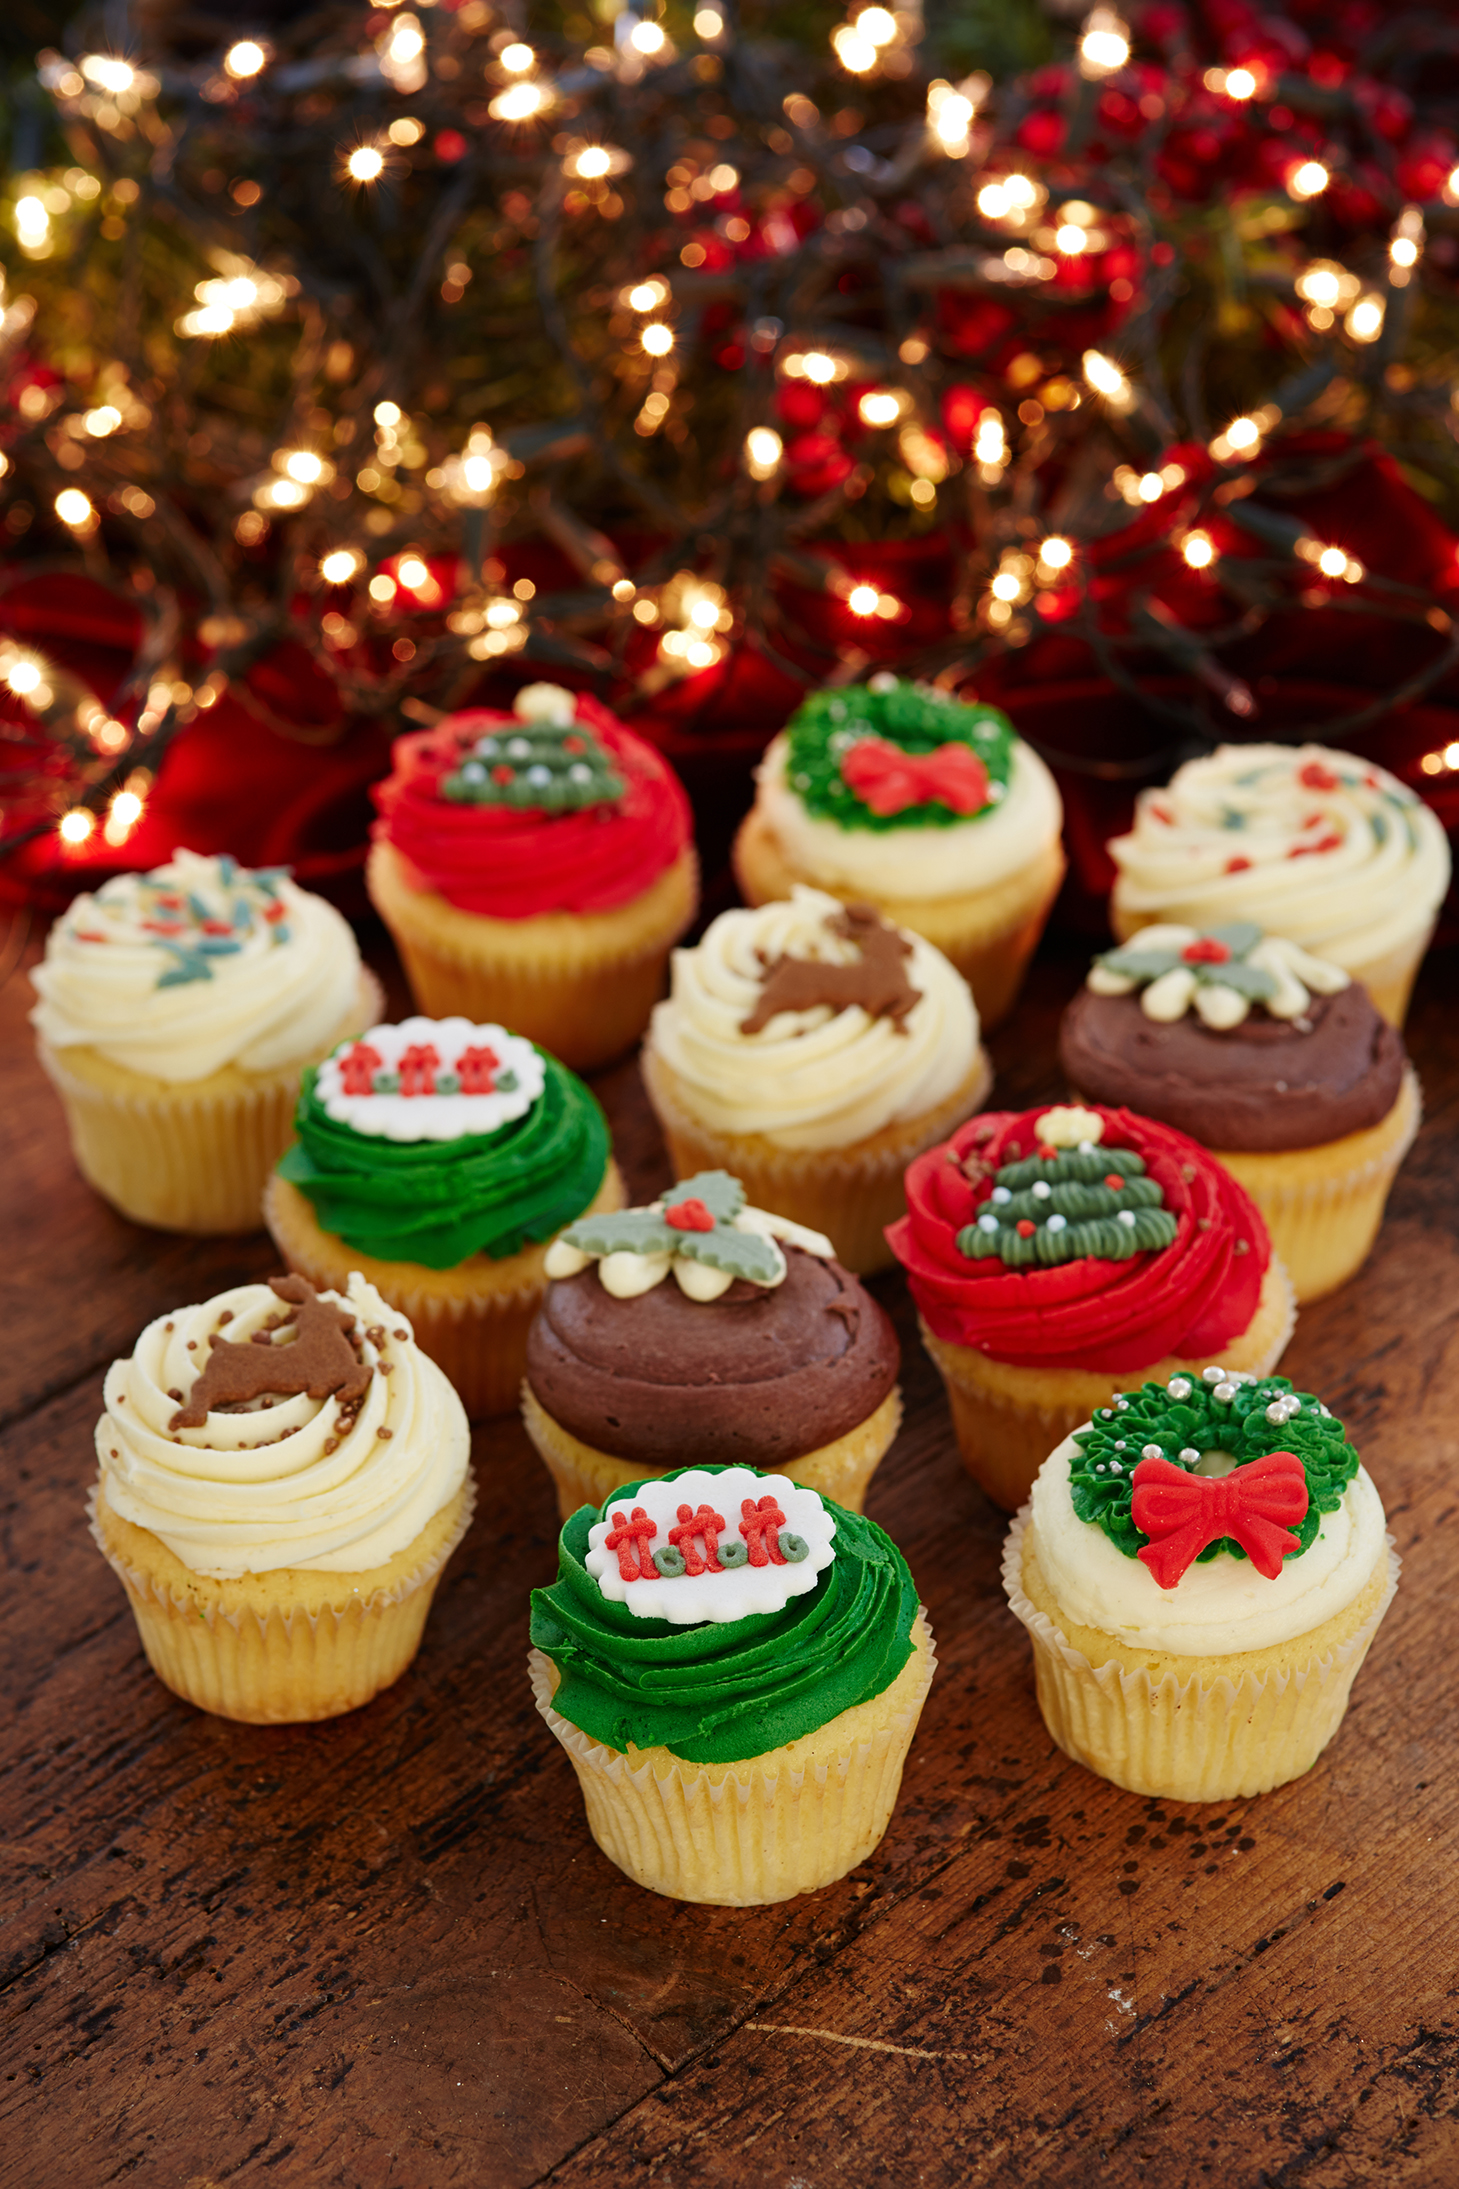 Press Release ロンドン発のカップケーキブランド Lola S Cupcakes Tokyo ローラズ カップケーキ東京 期間限定クリスマス商品販売 A S R株式会社のプレスリリース